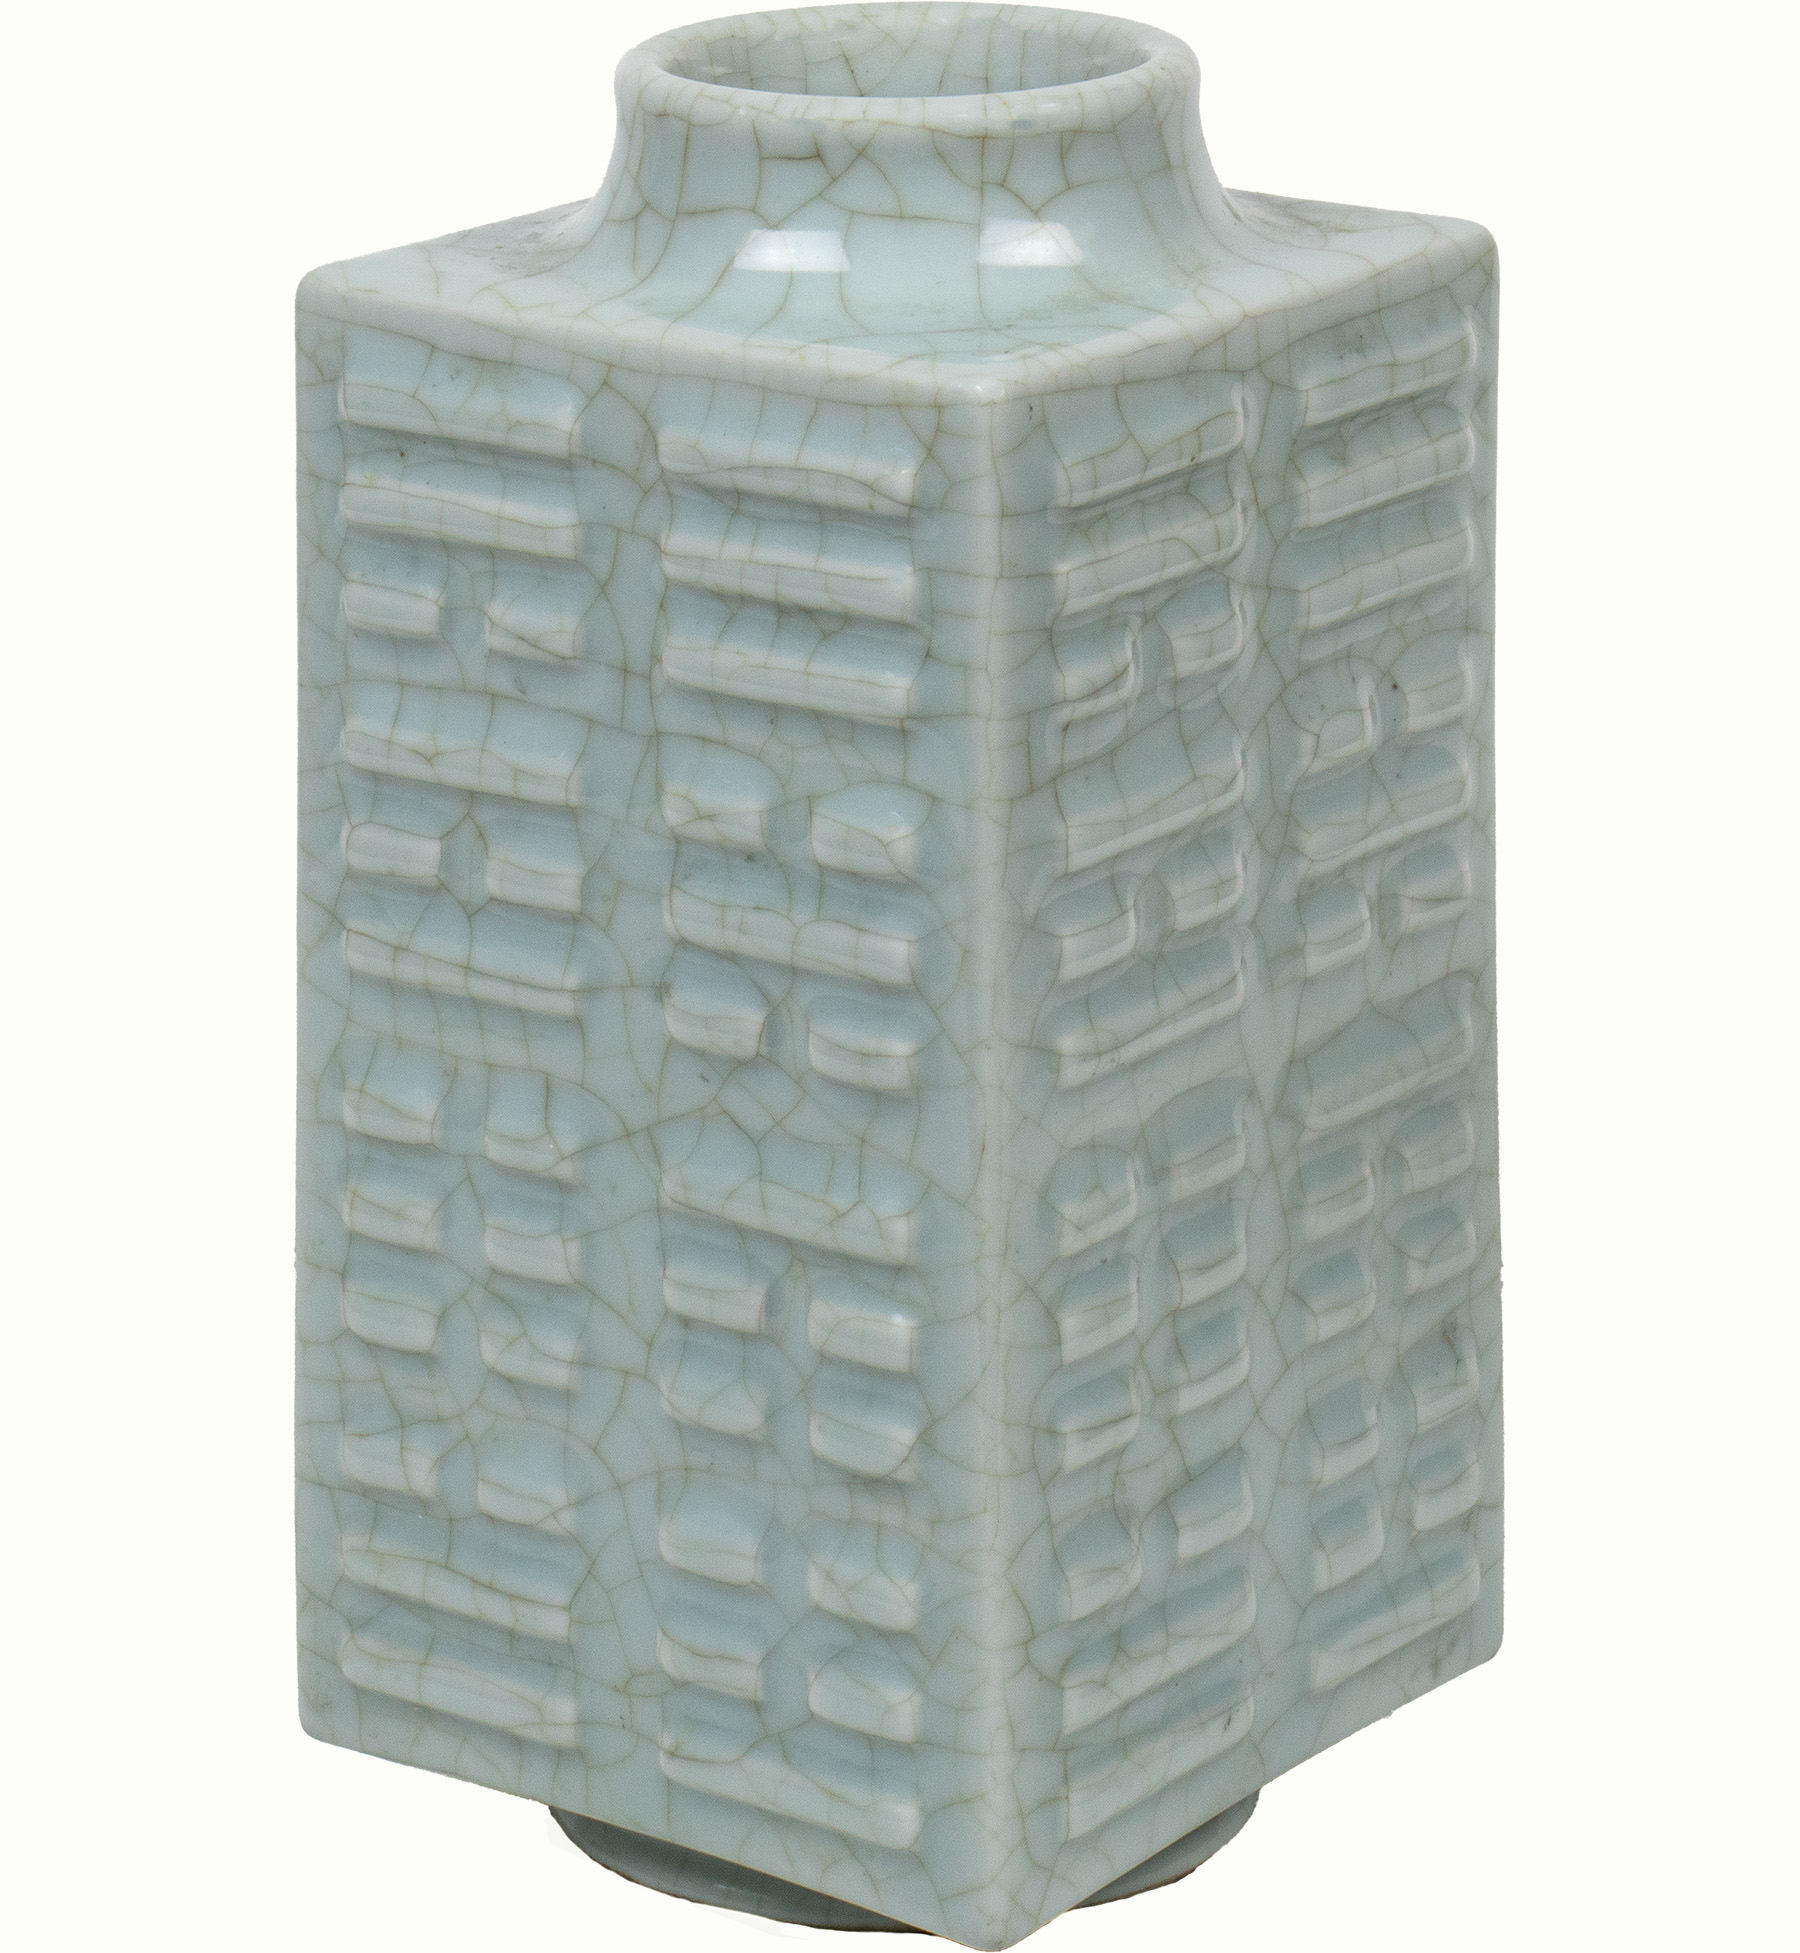 A Chinese celadon glazed crackled ground ‘trigram’ vase.